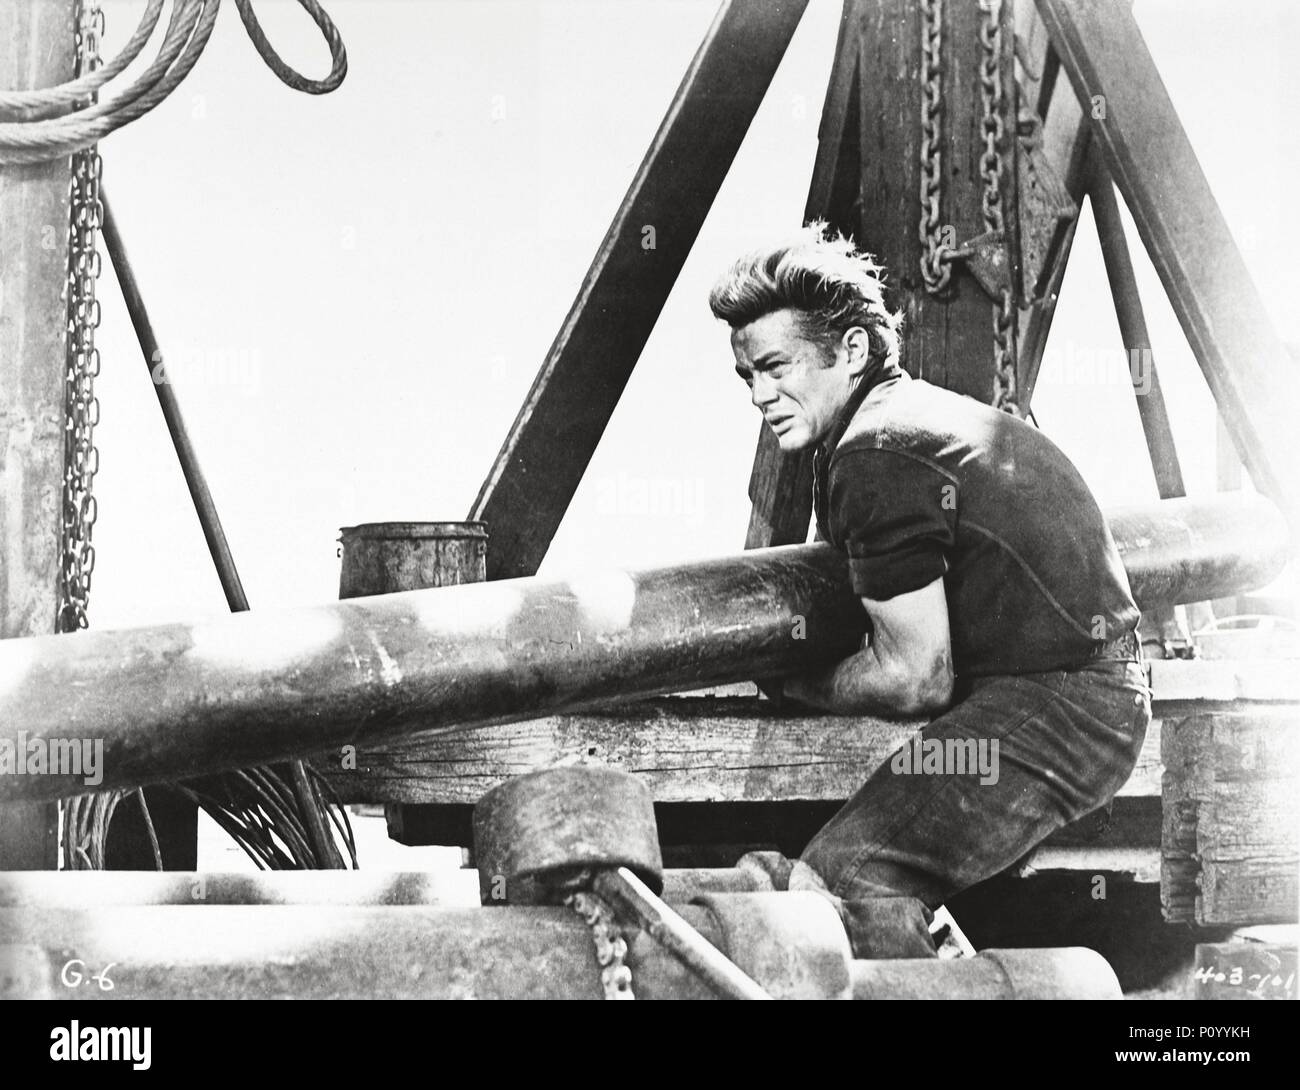 Original Film Title: GIANT.  English Title: GIANT.  Film Director: GEORGE STEVENS.  Year: 1956.  Stars: JAMES DEAN. Credit: WARNER BROTHERS / Album Stock Photo